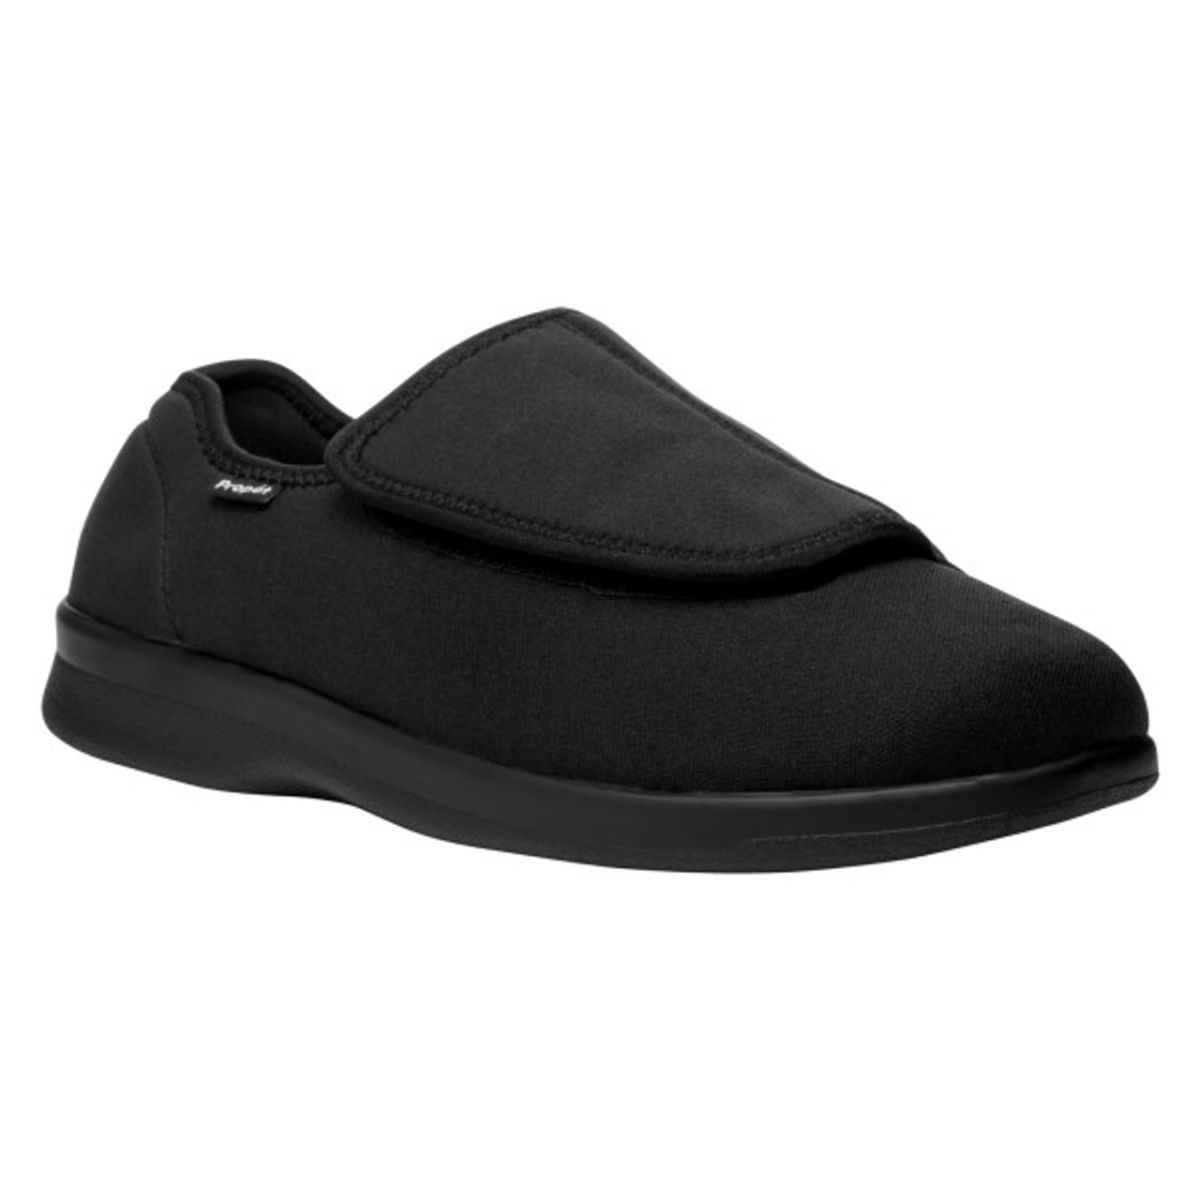 Propet Men's Cush N Foot Slip-On Shoe Black - M0202B BLACK - BLACK, 8.5 X-Wide